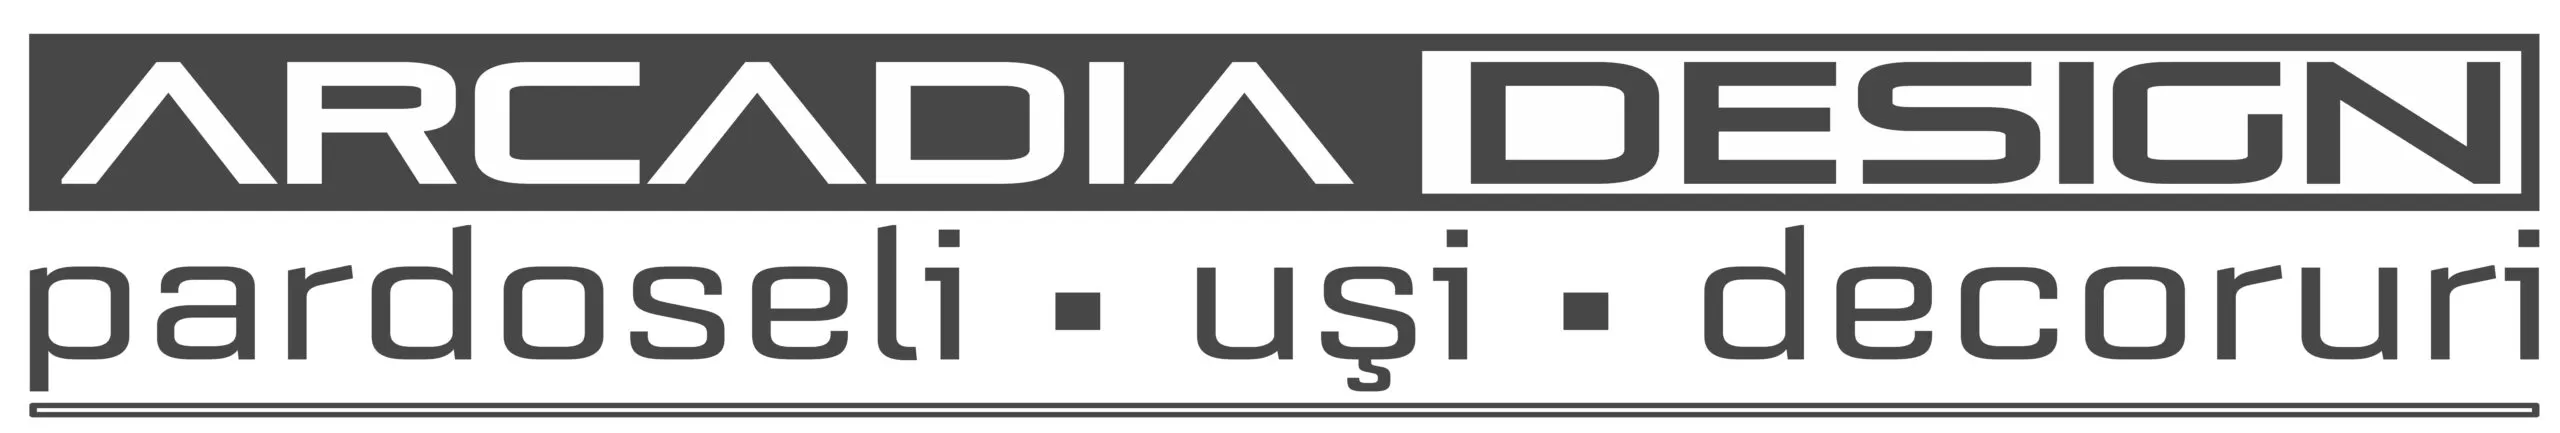 logo-Arcadia-Design-2-scaled.jpg